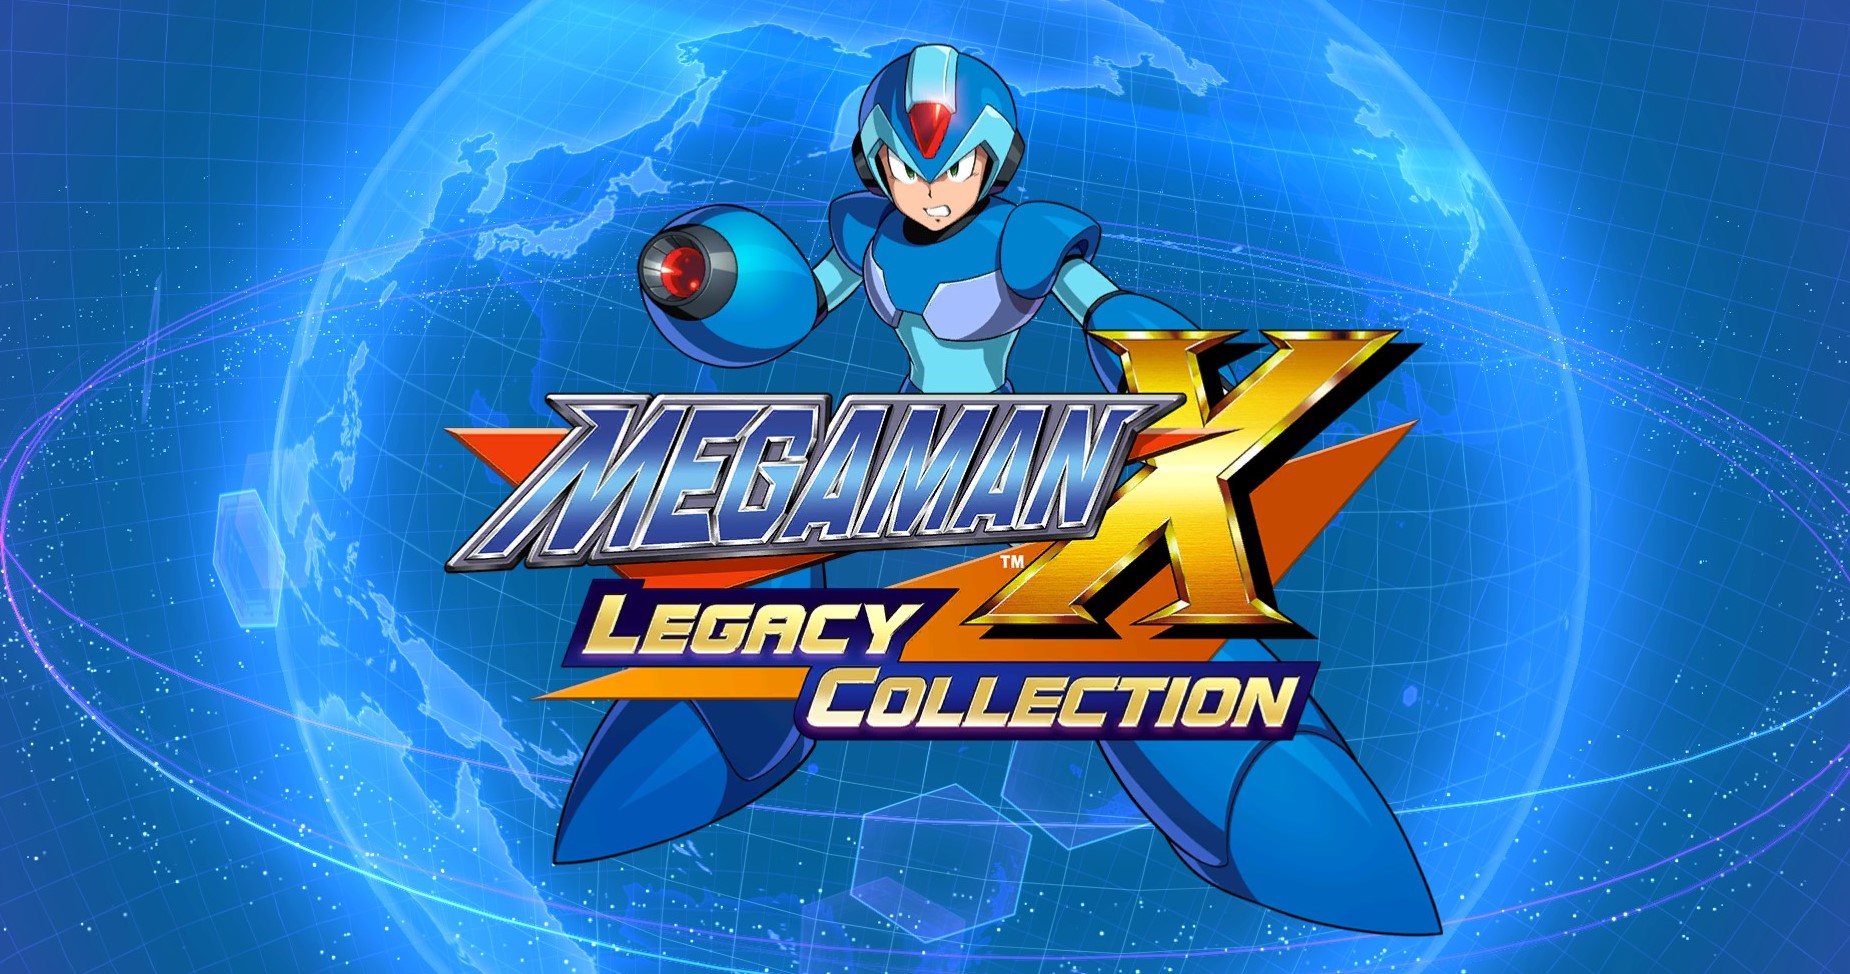 Megaman x9 confirmed ultimate